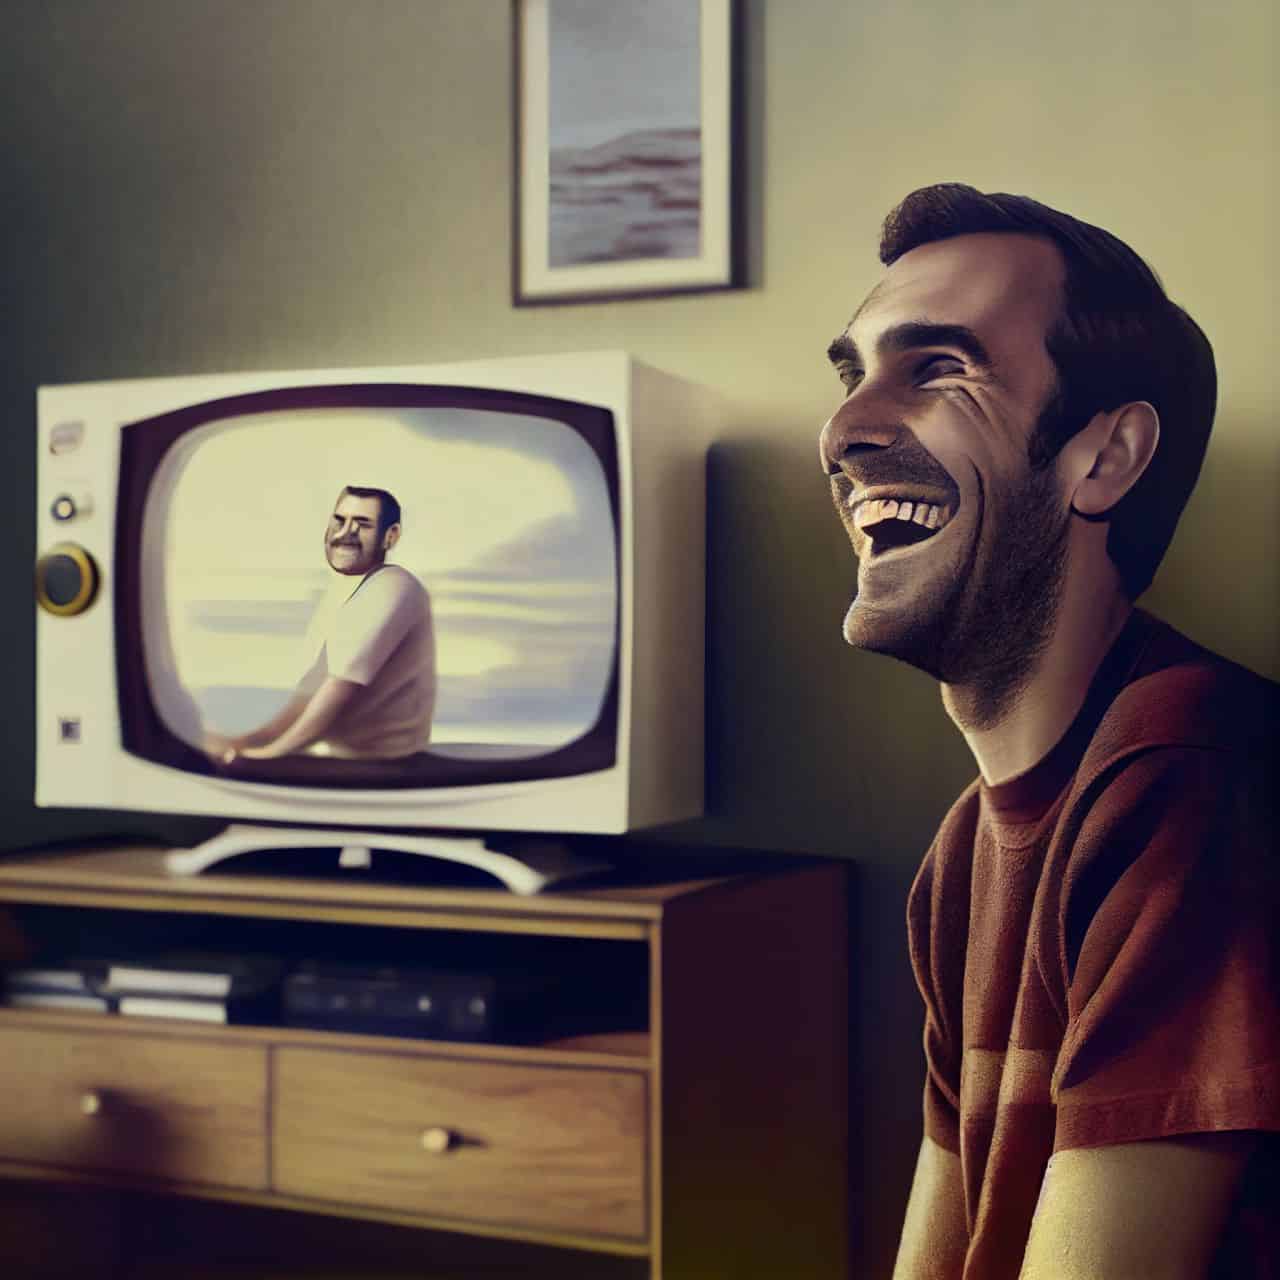 man smiling and watching tv